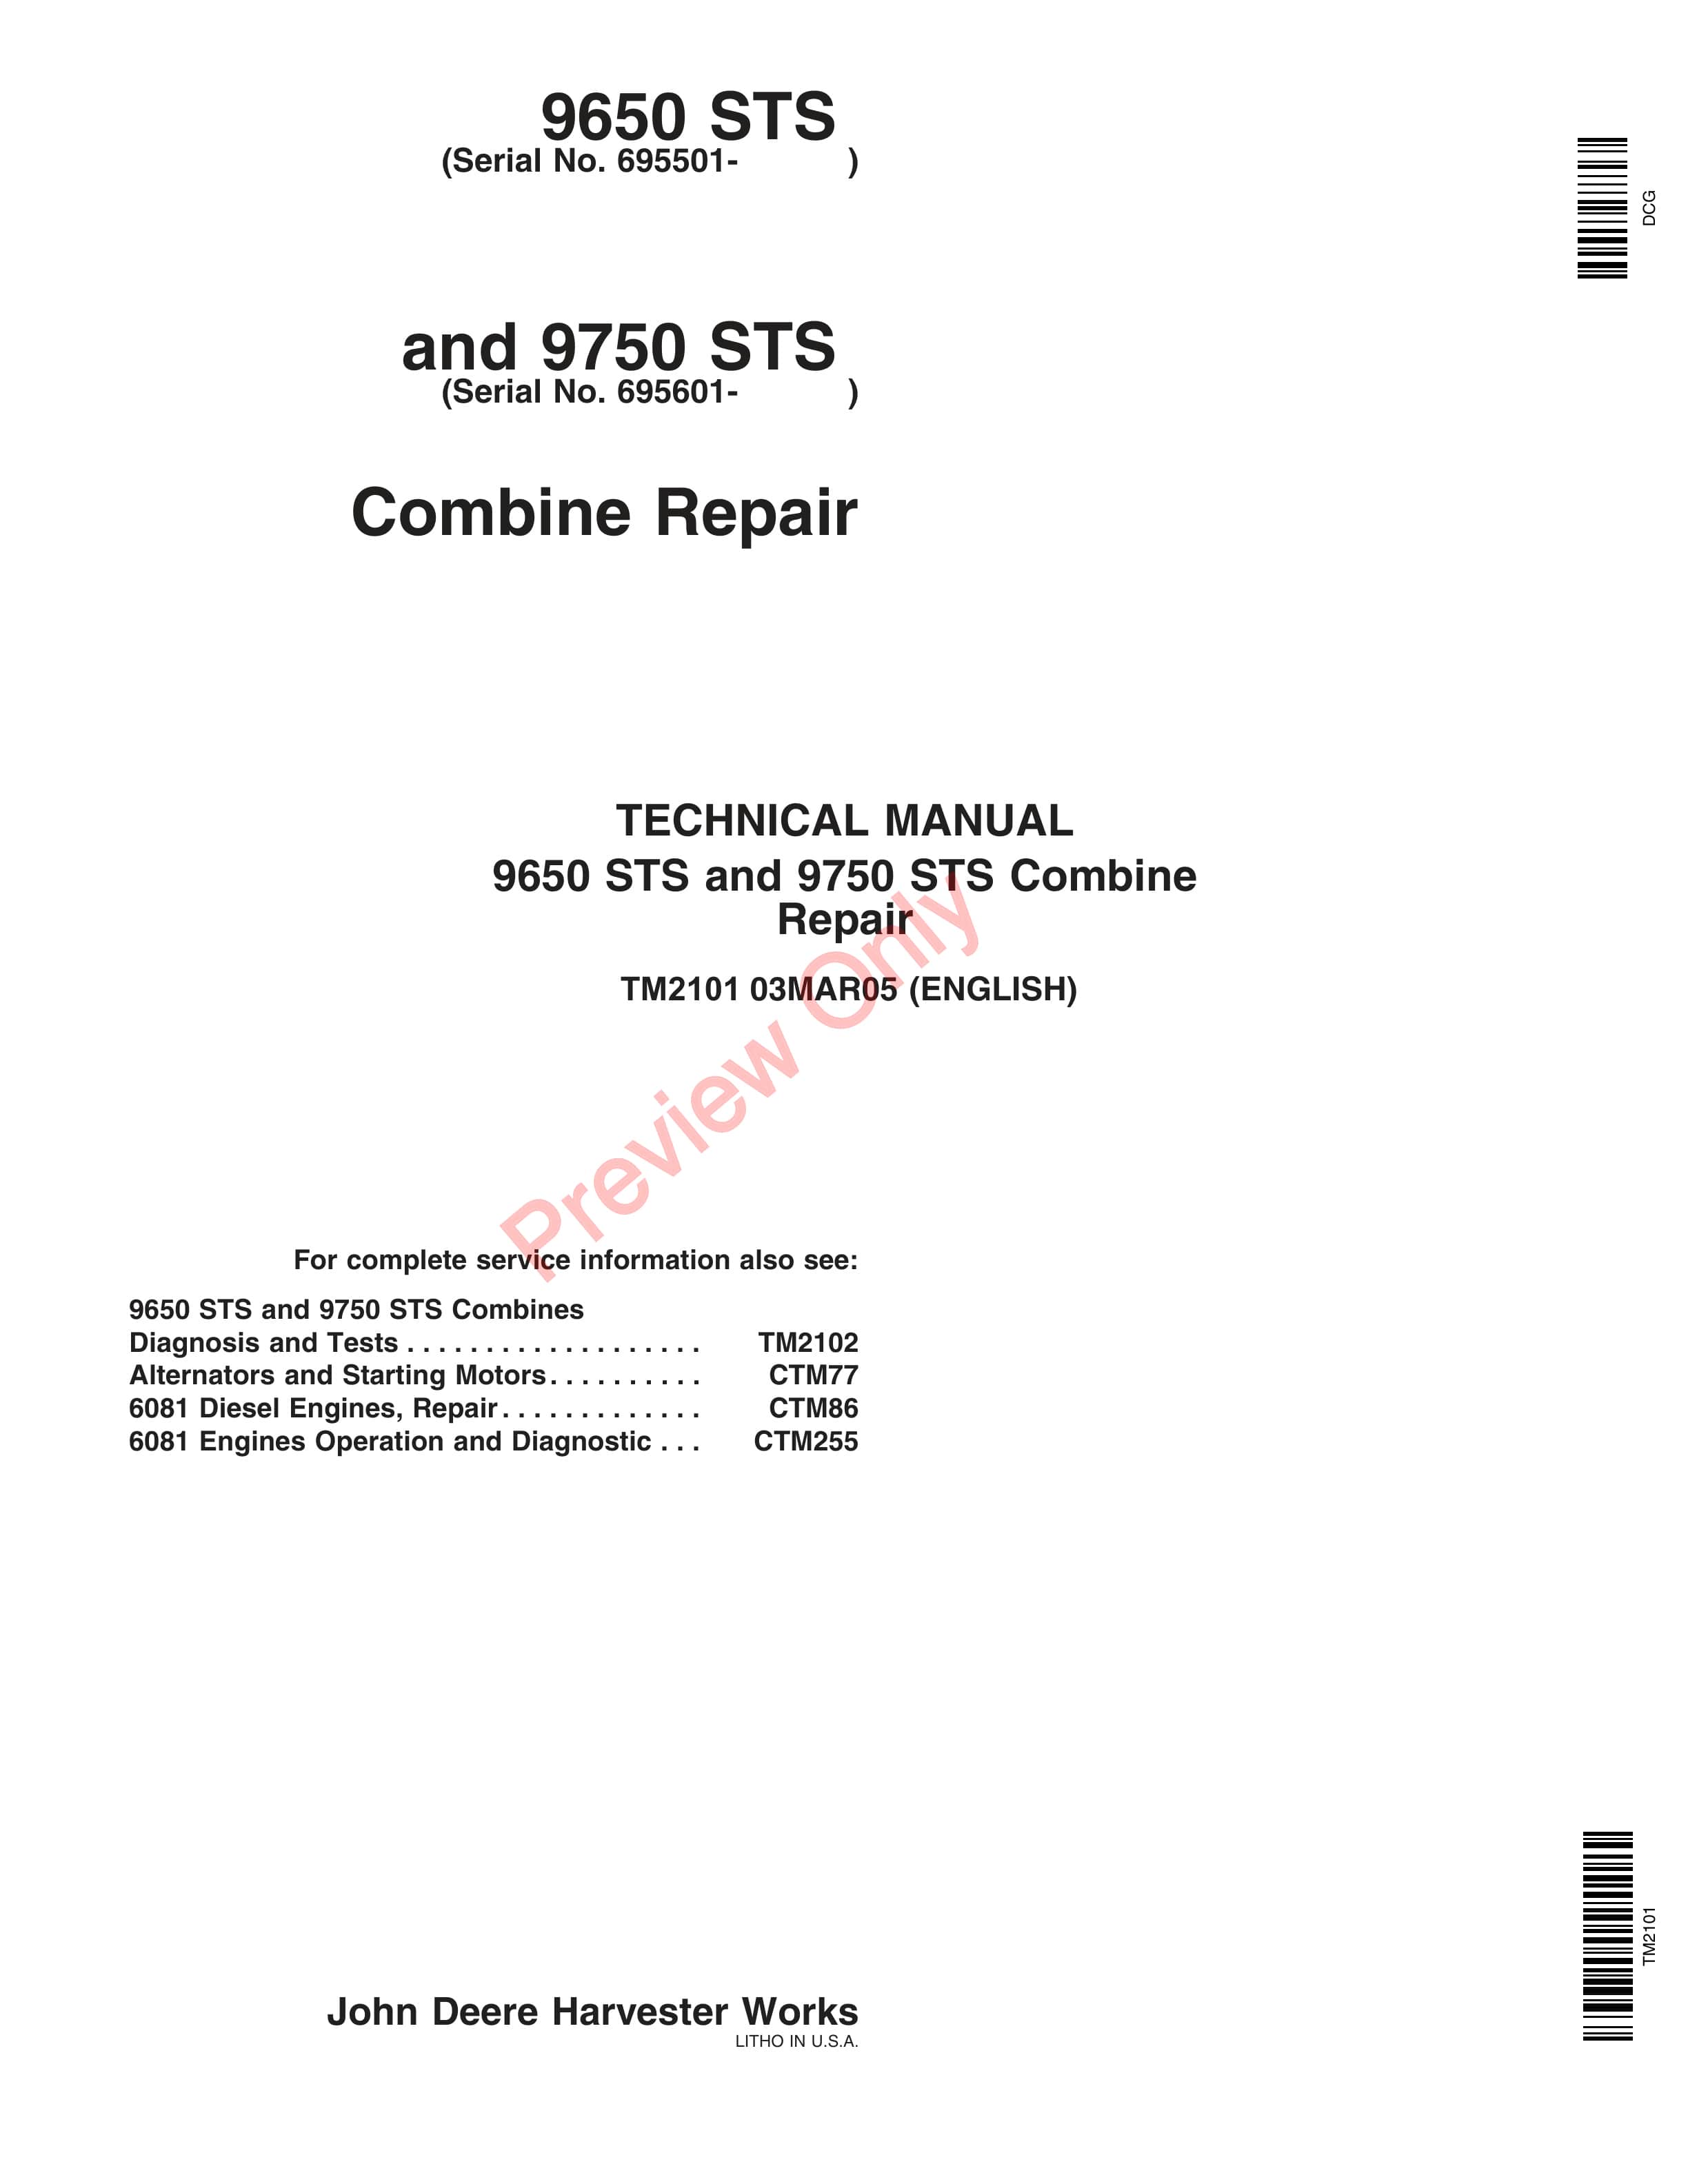 John Deere 9650 STS Combines (695501-), 9750 STS Combines (695601-) Repair Technical Manual TM2101 03MAR05 PDF